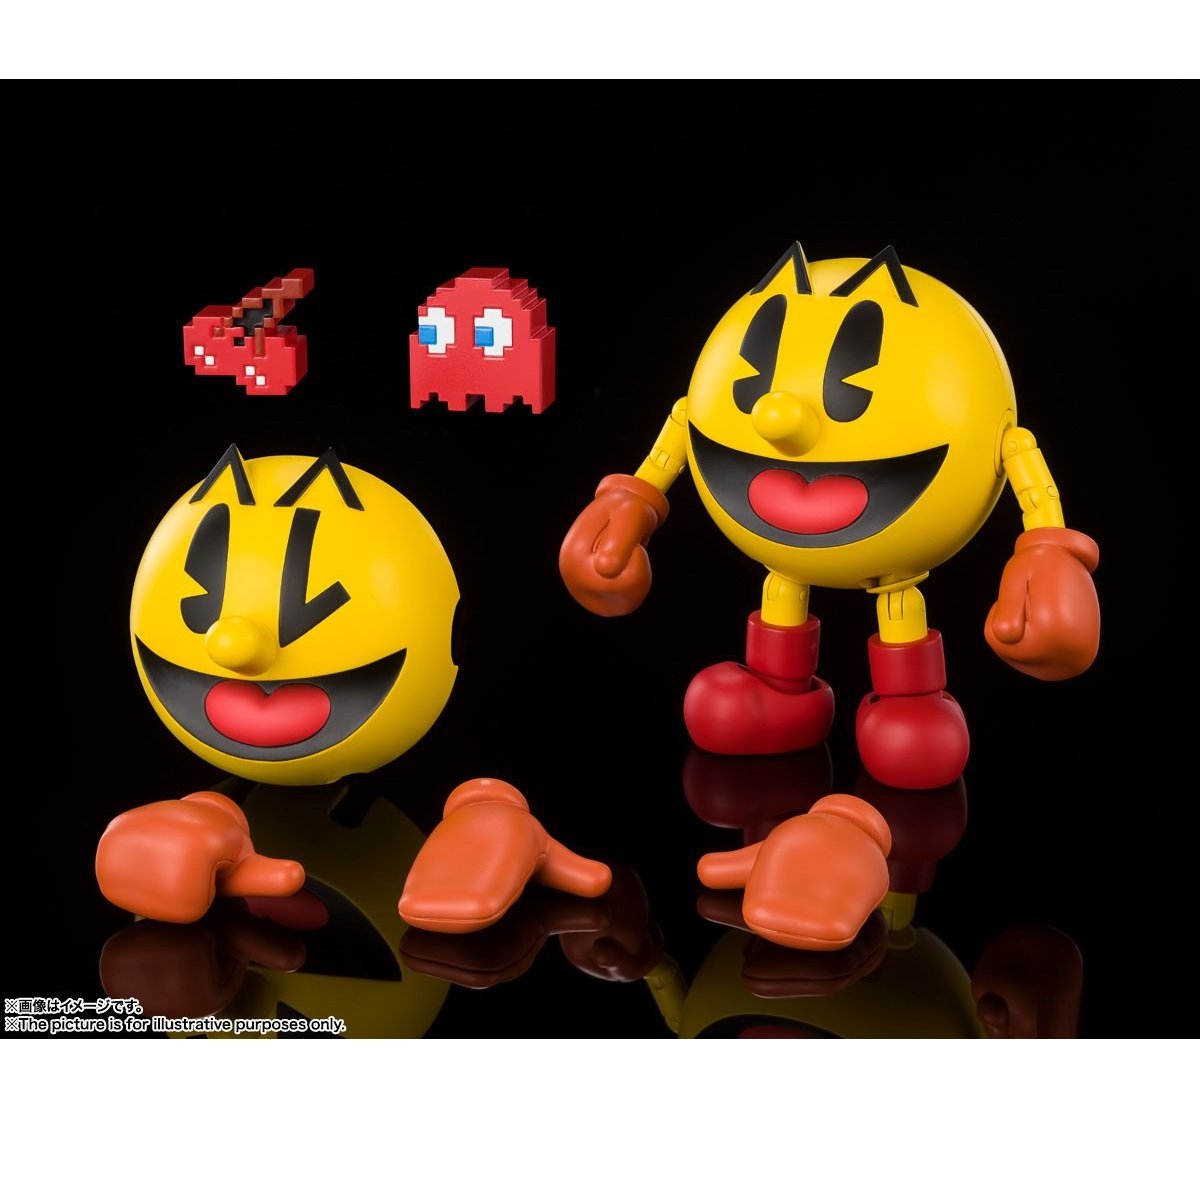 S.H.Figuarts Pac-Man (PVC Figure)-Bandai-Ace Cards & Collectibles